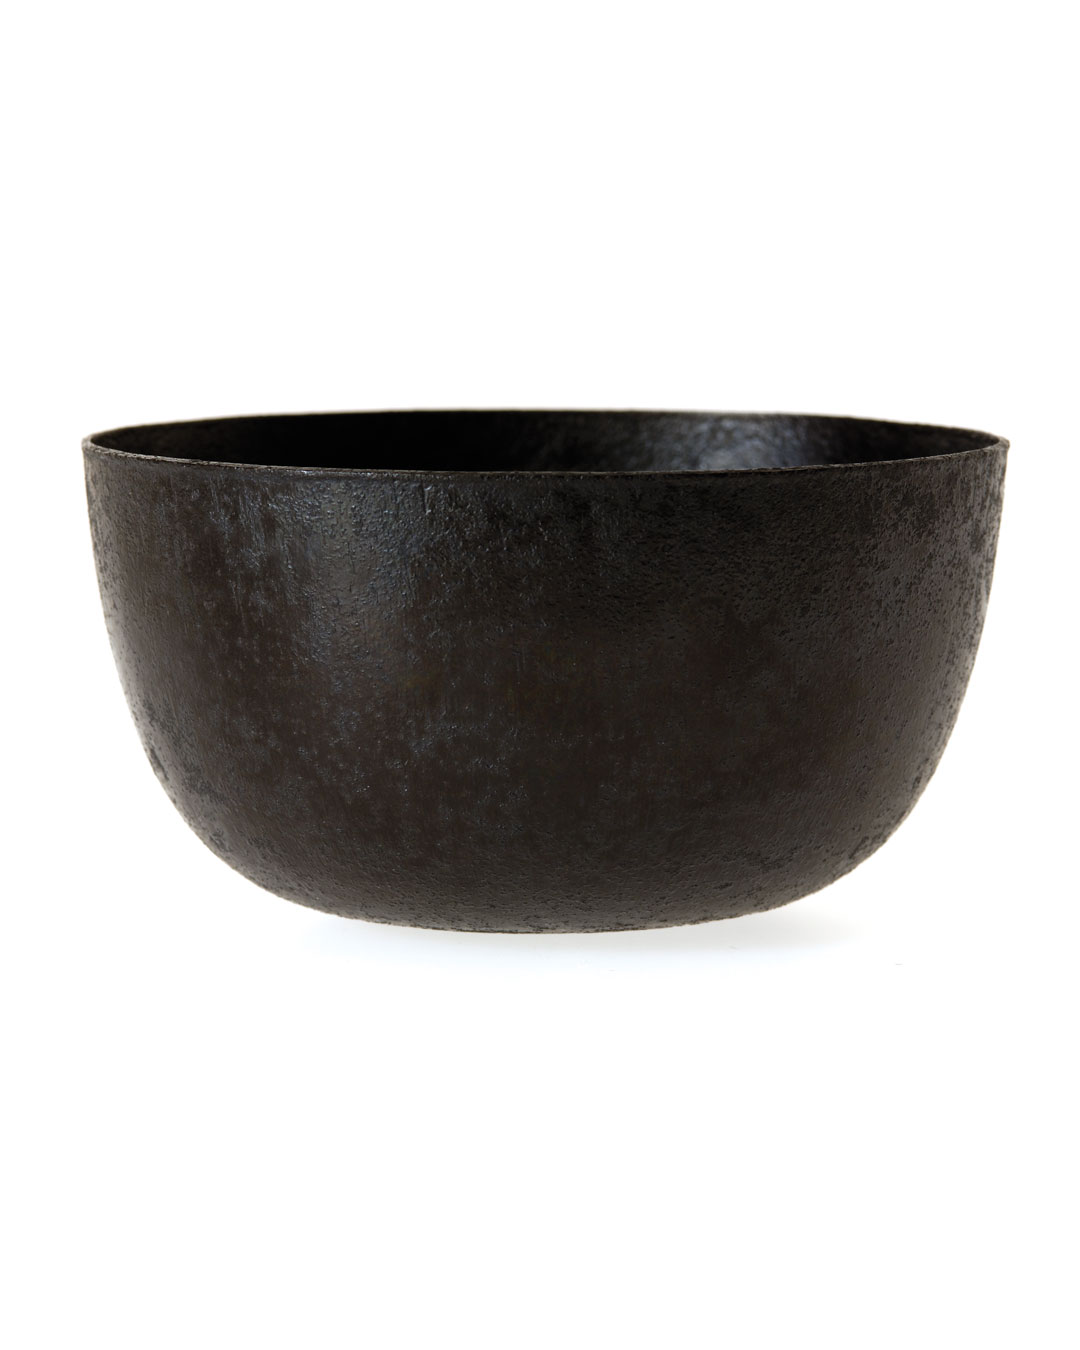 Tore Svensson, untitled, 1999, bowl; iron, 115 x ø 270 mm, €3500